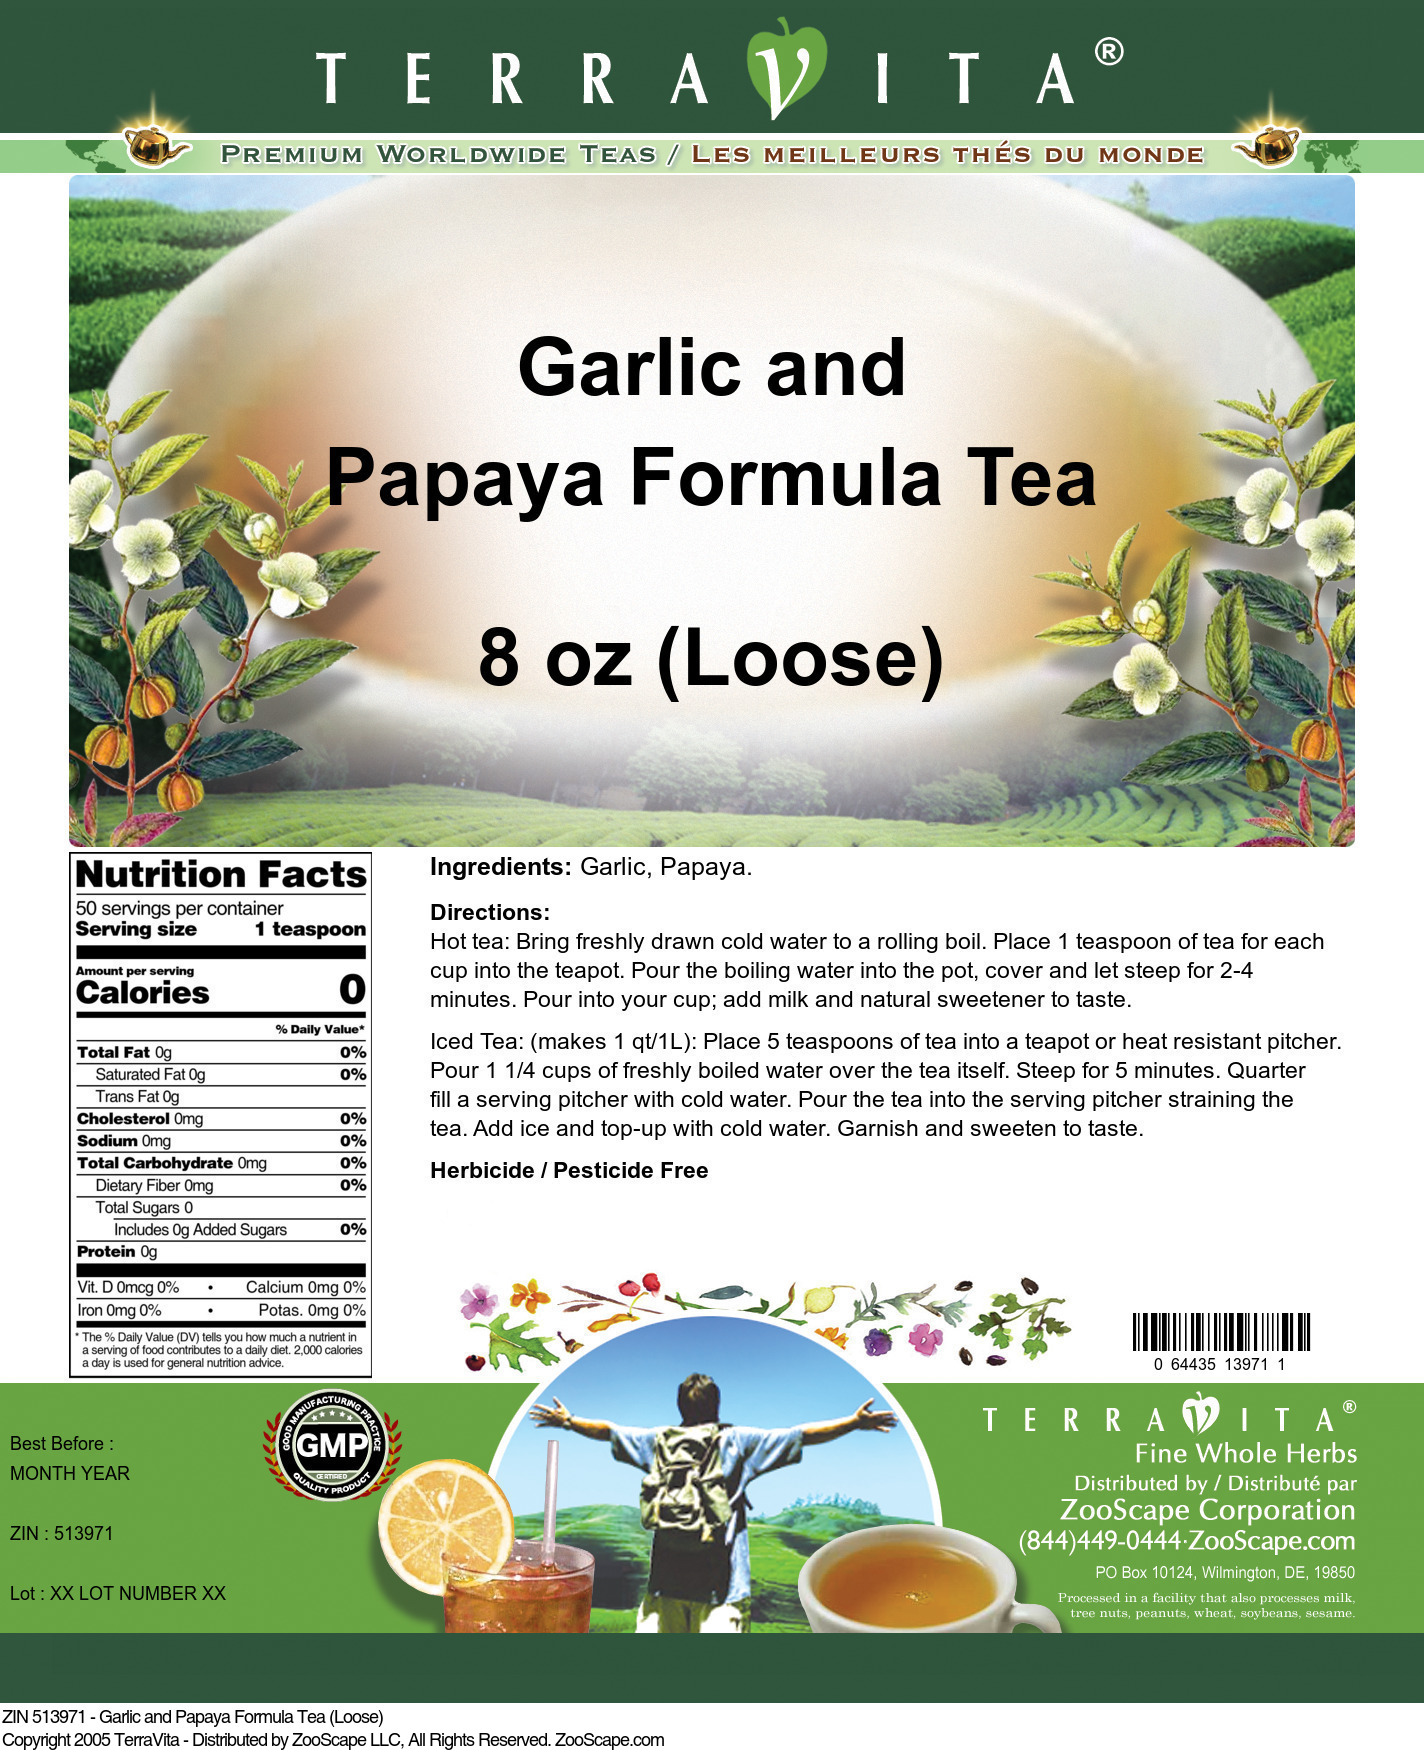 Garlic and Papaya Formula Tea (Loose) - Label